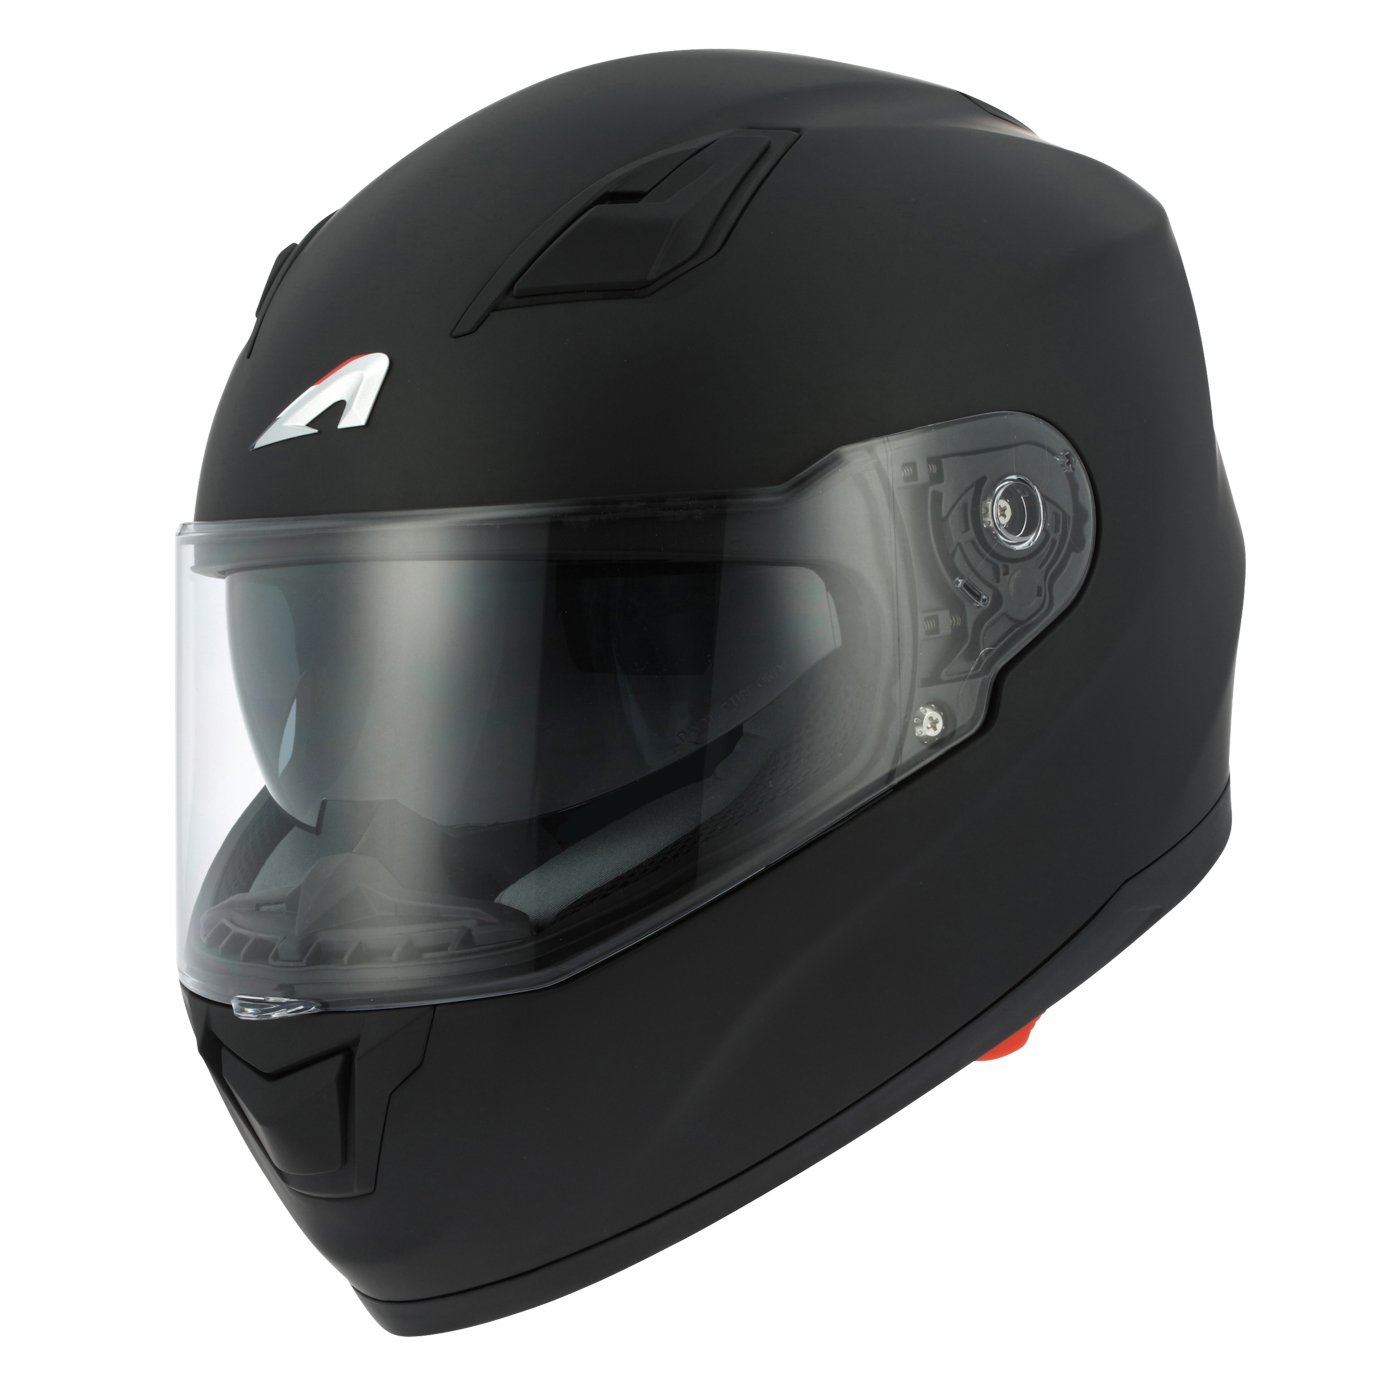 Astone Helmets - Casque de moto GT900 Monocolor - Casque intégral large vision - Casque de moto intégral homologué - Casque de moto mixte en polycarbonate - Matt black S von Astone Helmets